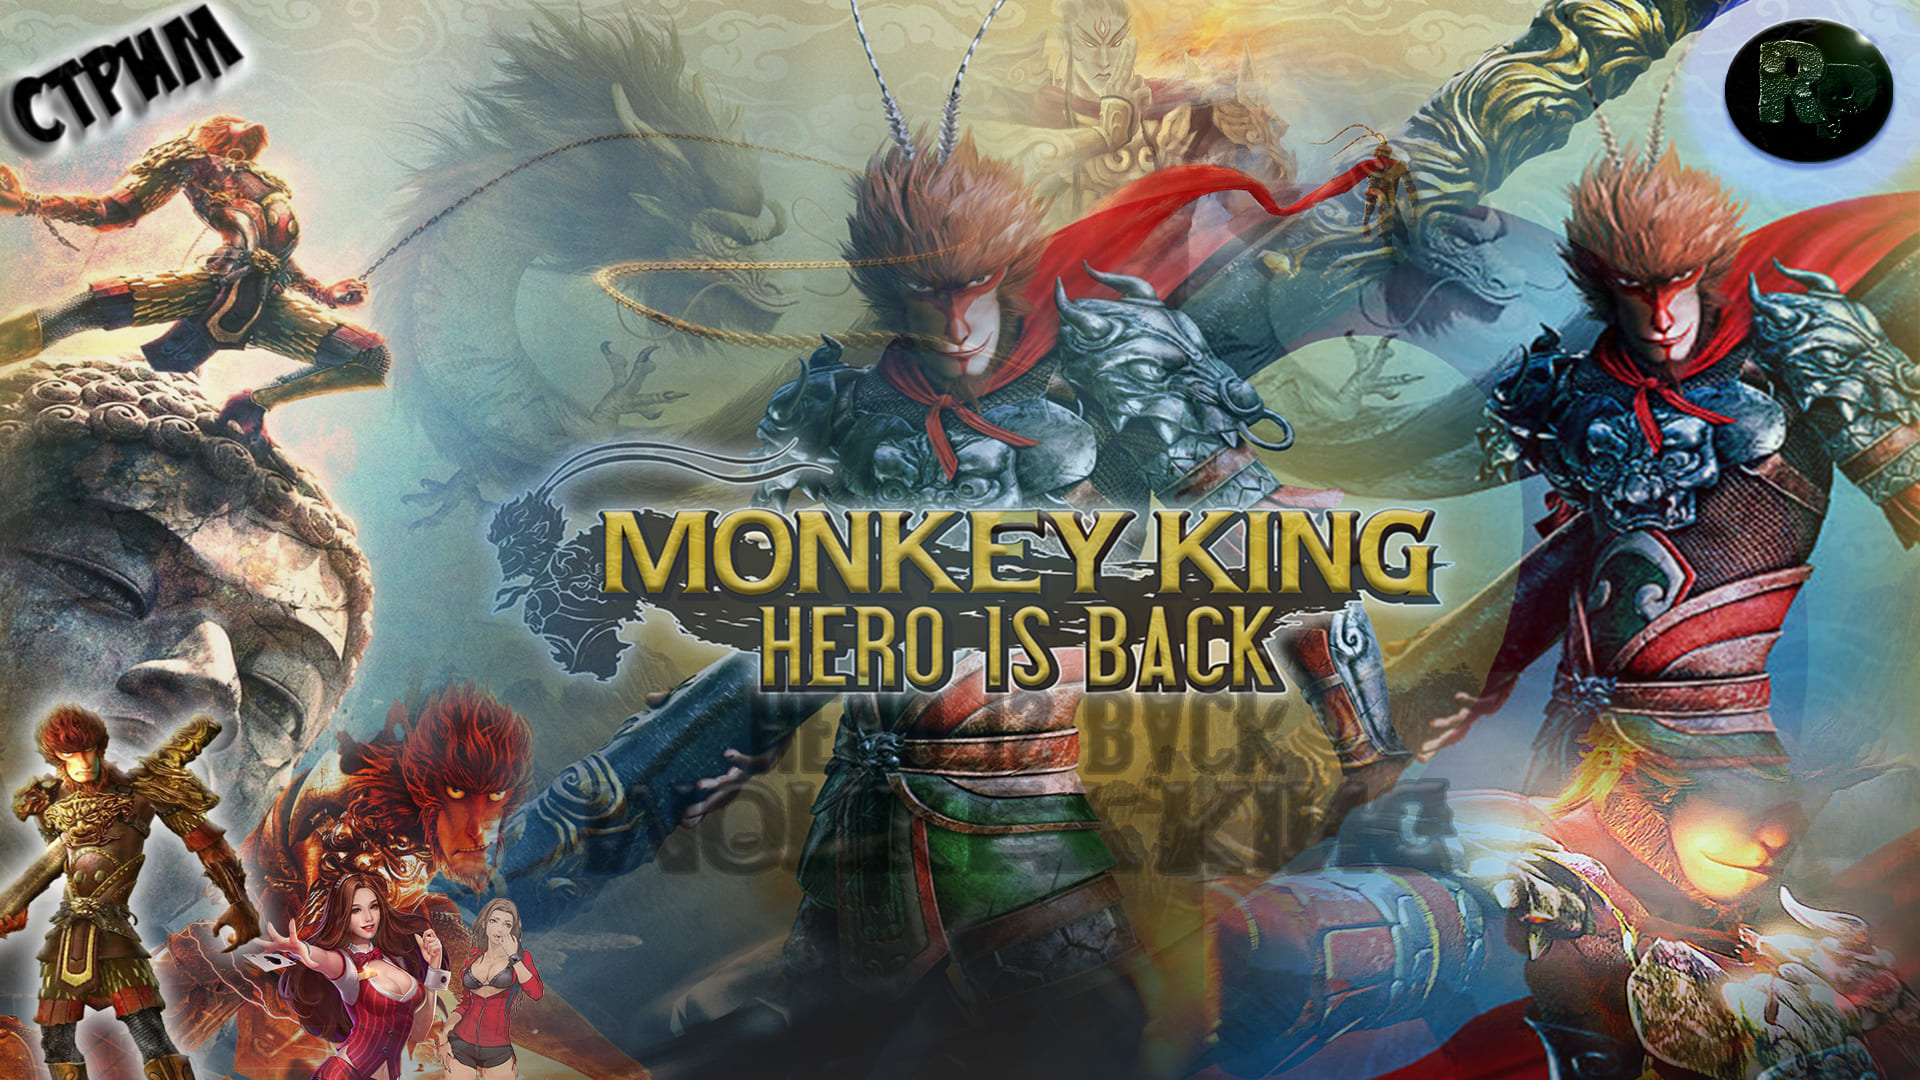 Monkey King: Hero is back #1 Прохождение на русском #RitorPlay